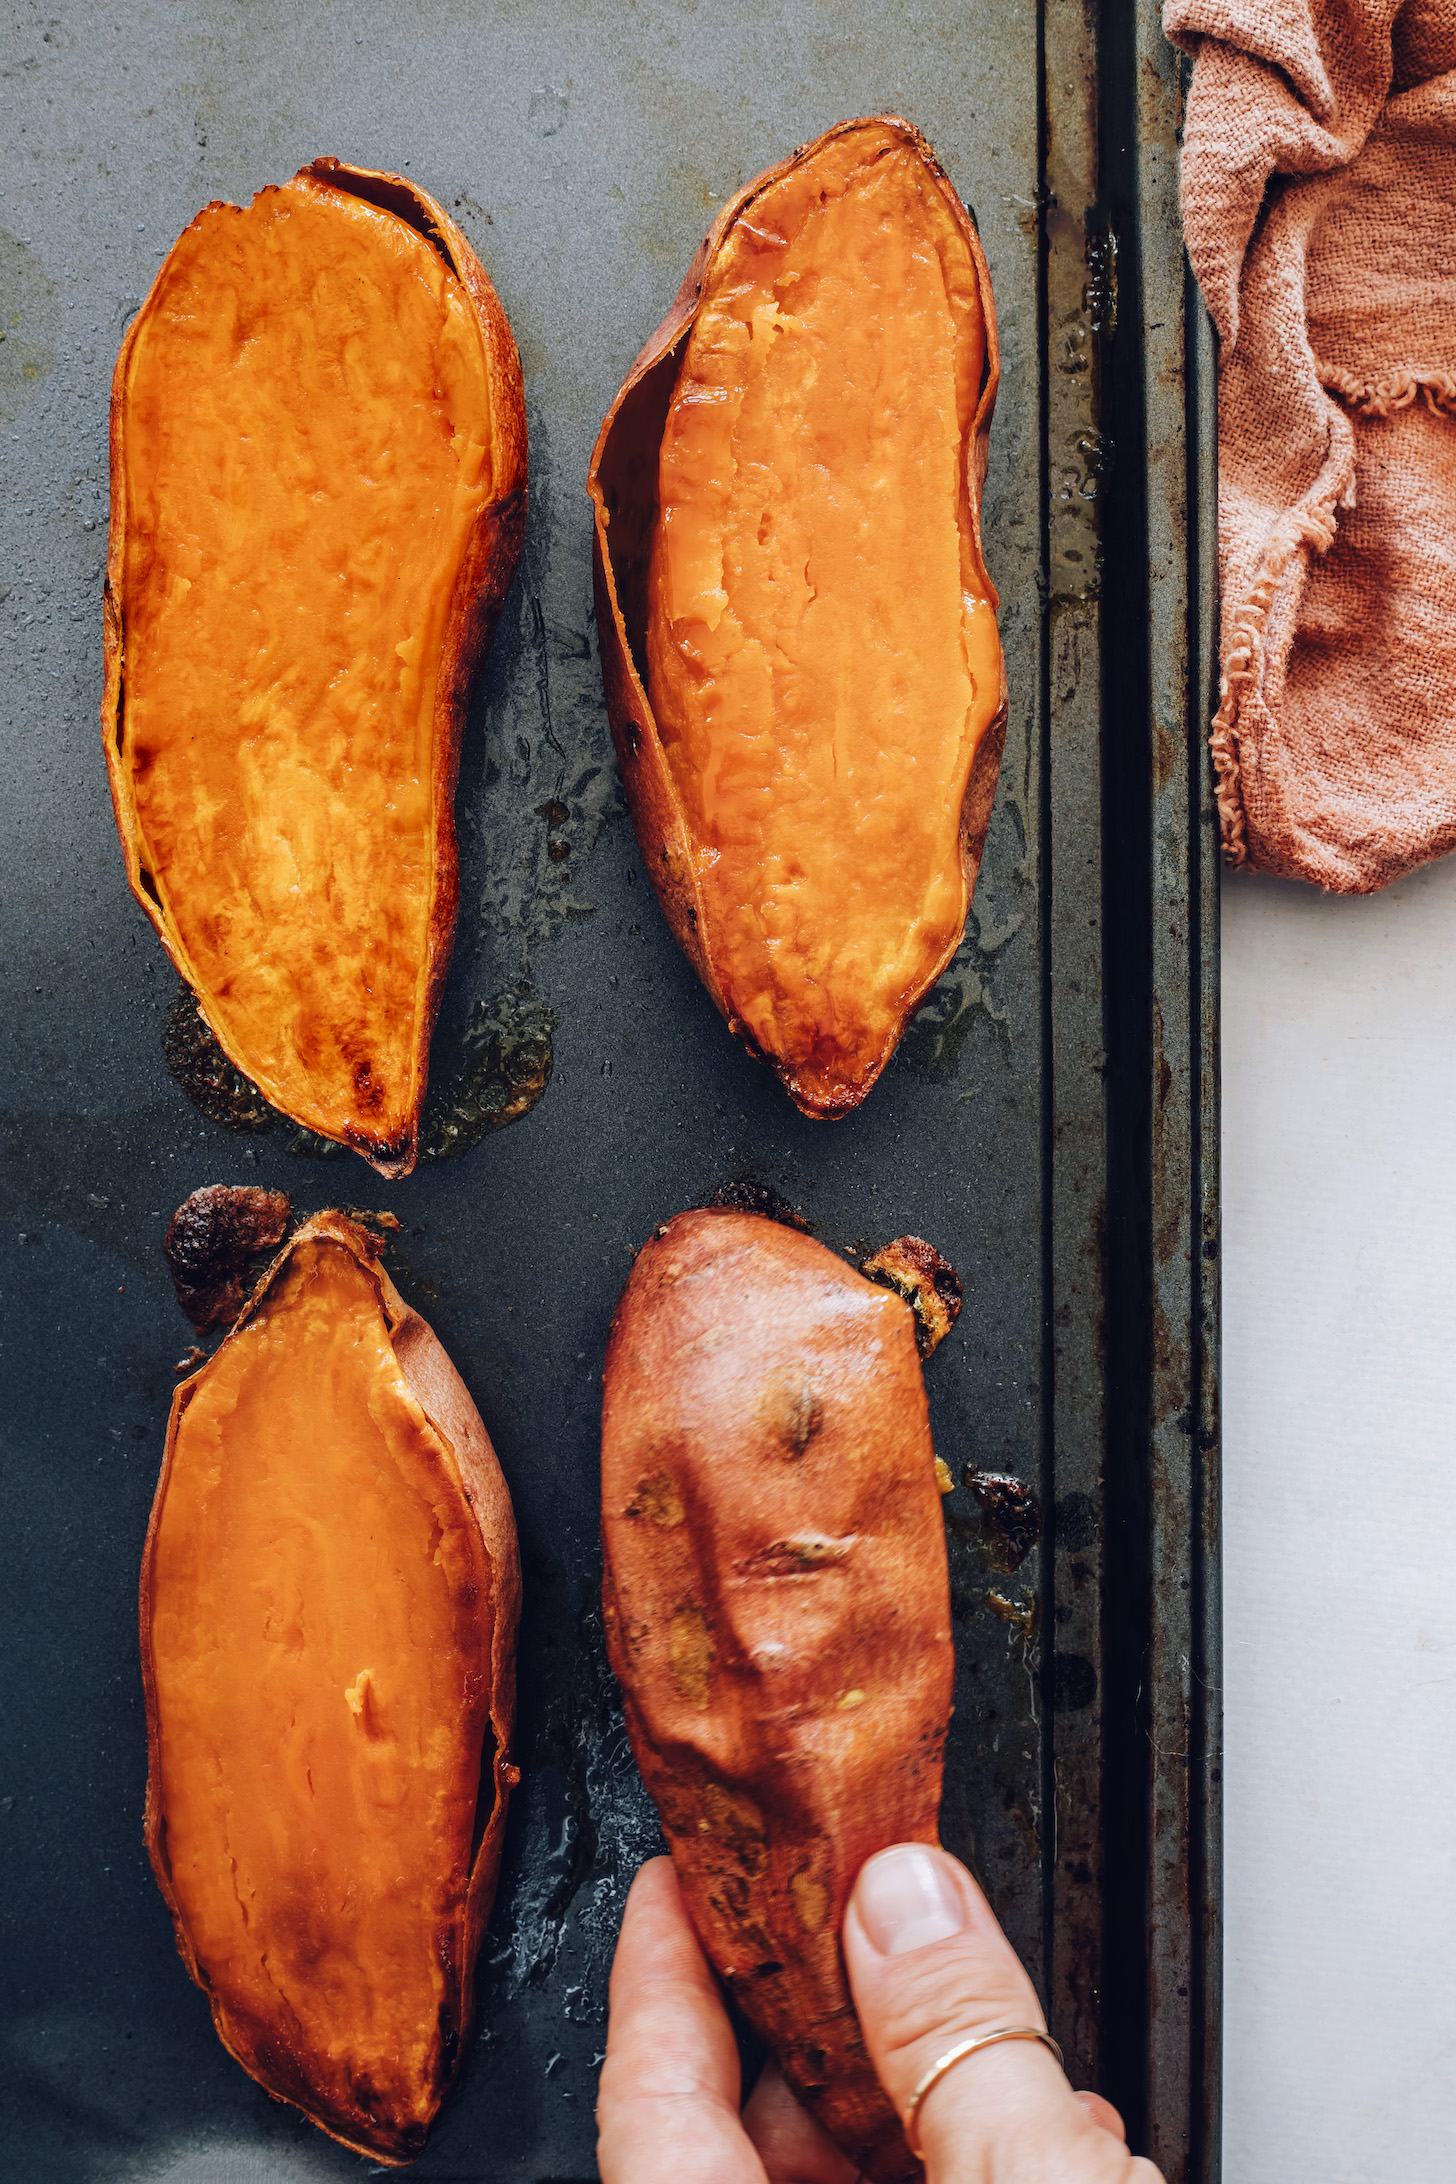 Perfectly roasted sweet potatoes